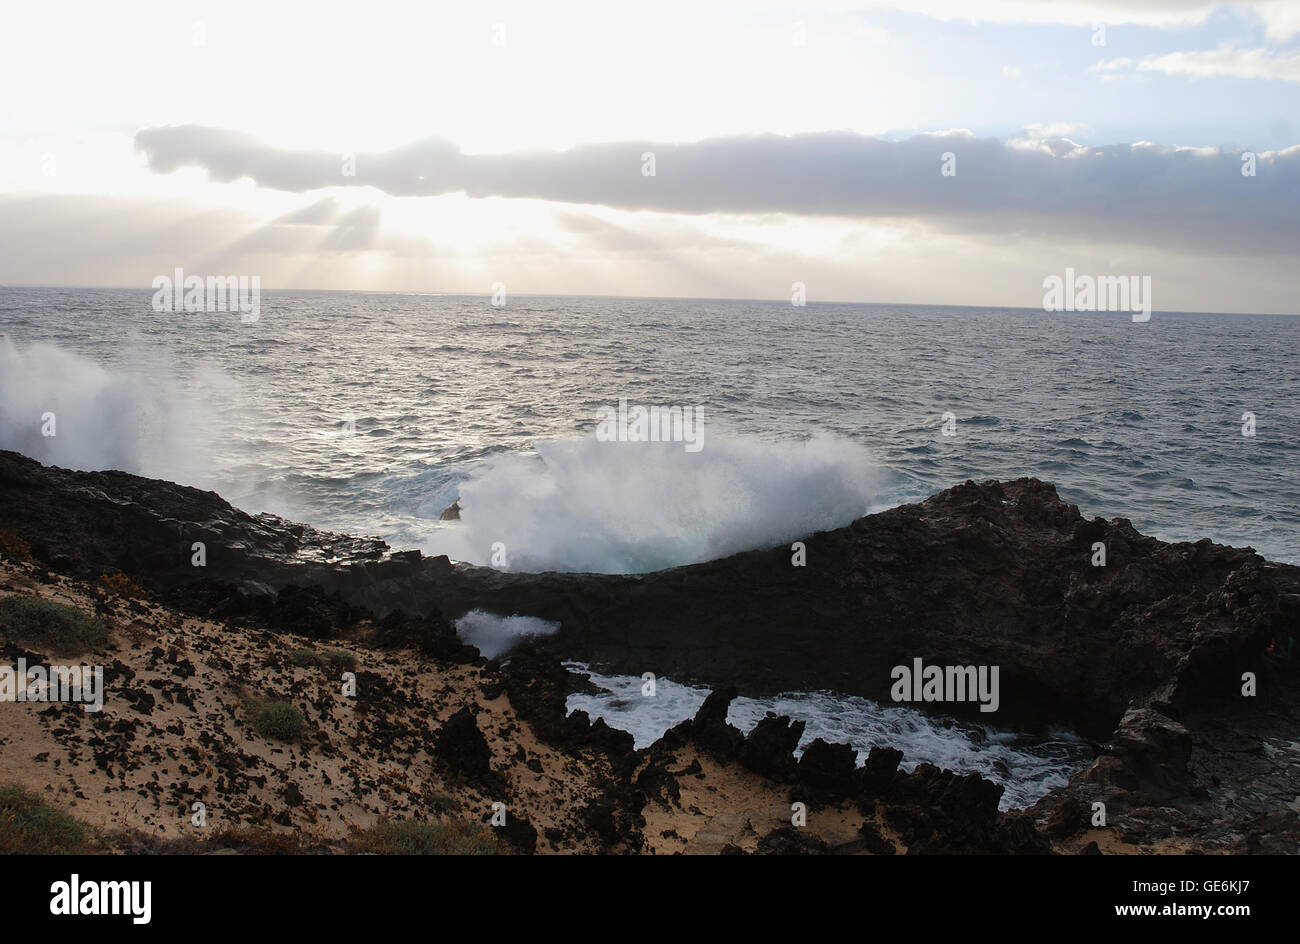 Wave and volcanic coast. Mala, Lanzarote island, Canary Islands, Spain. Stock Photo